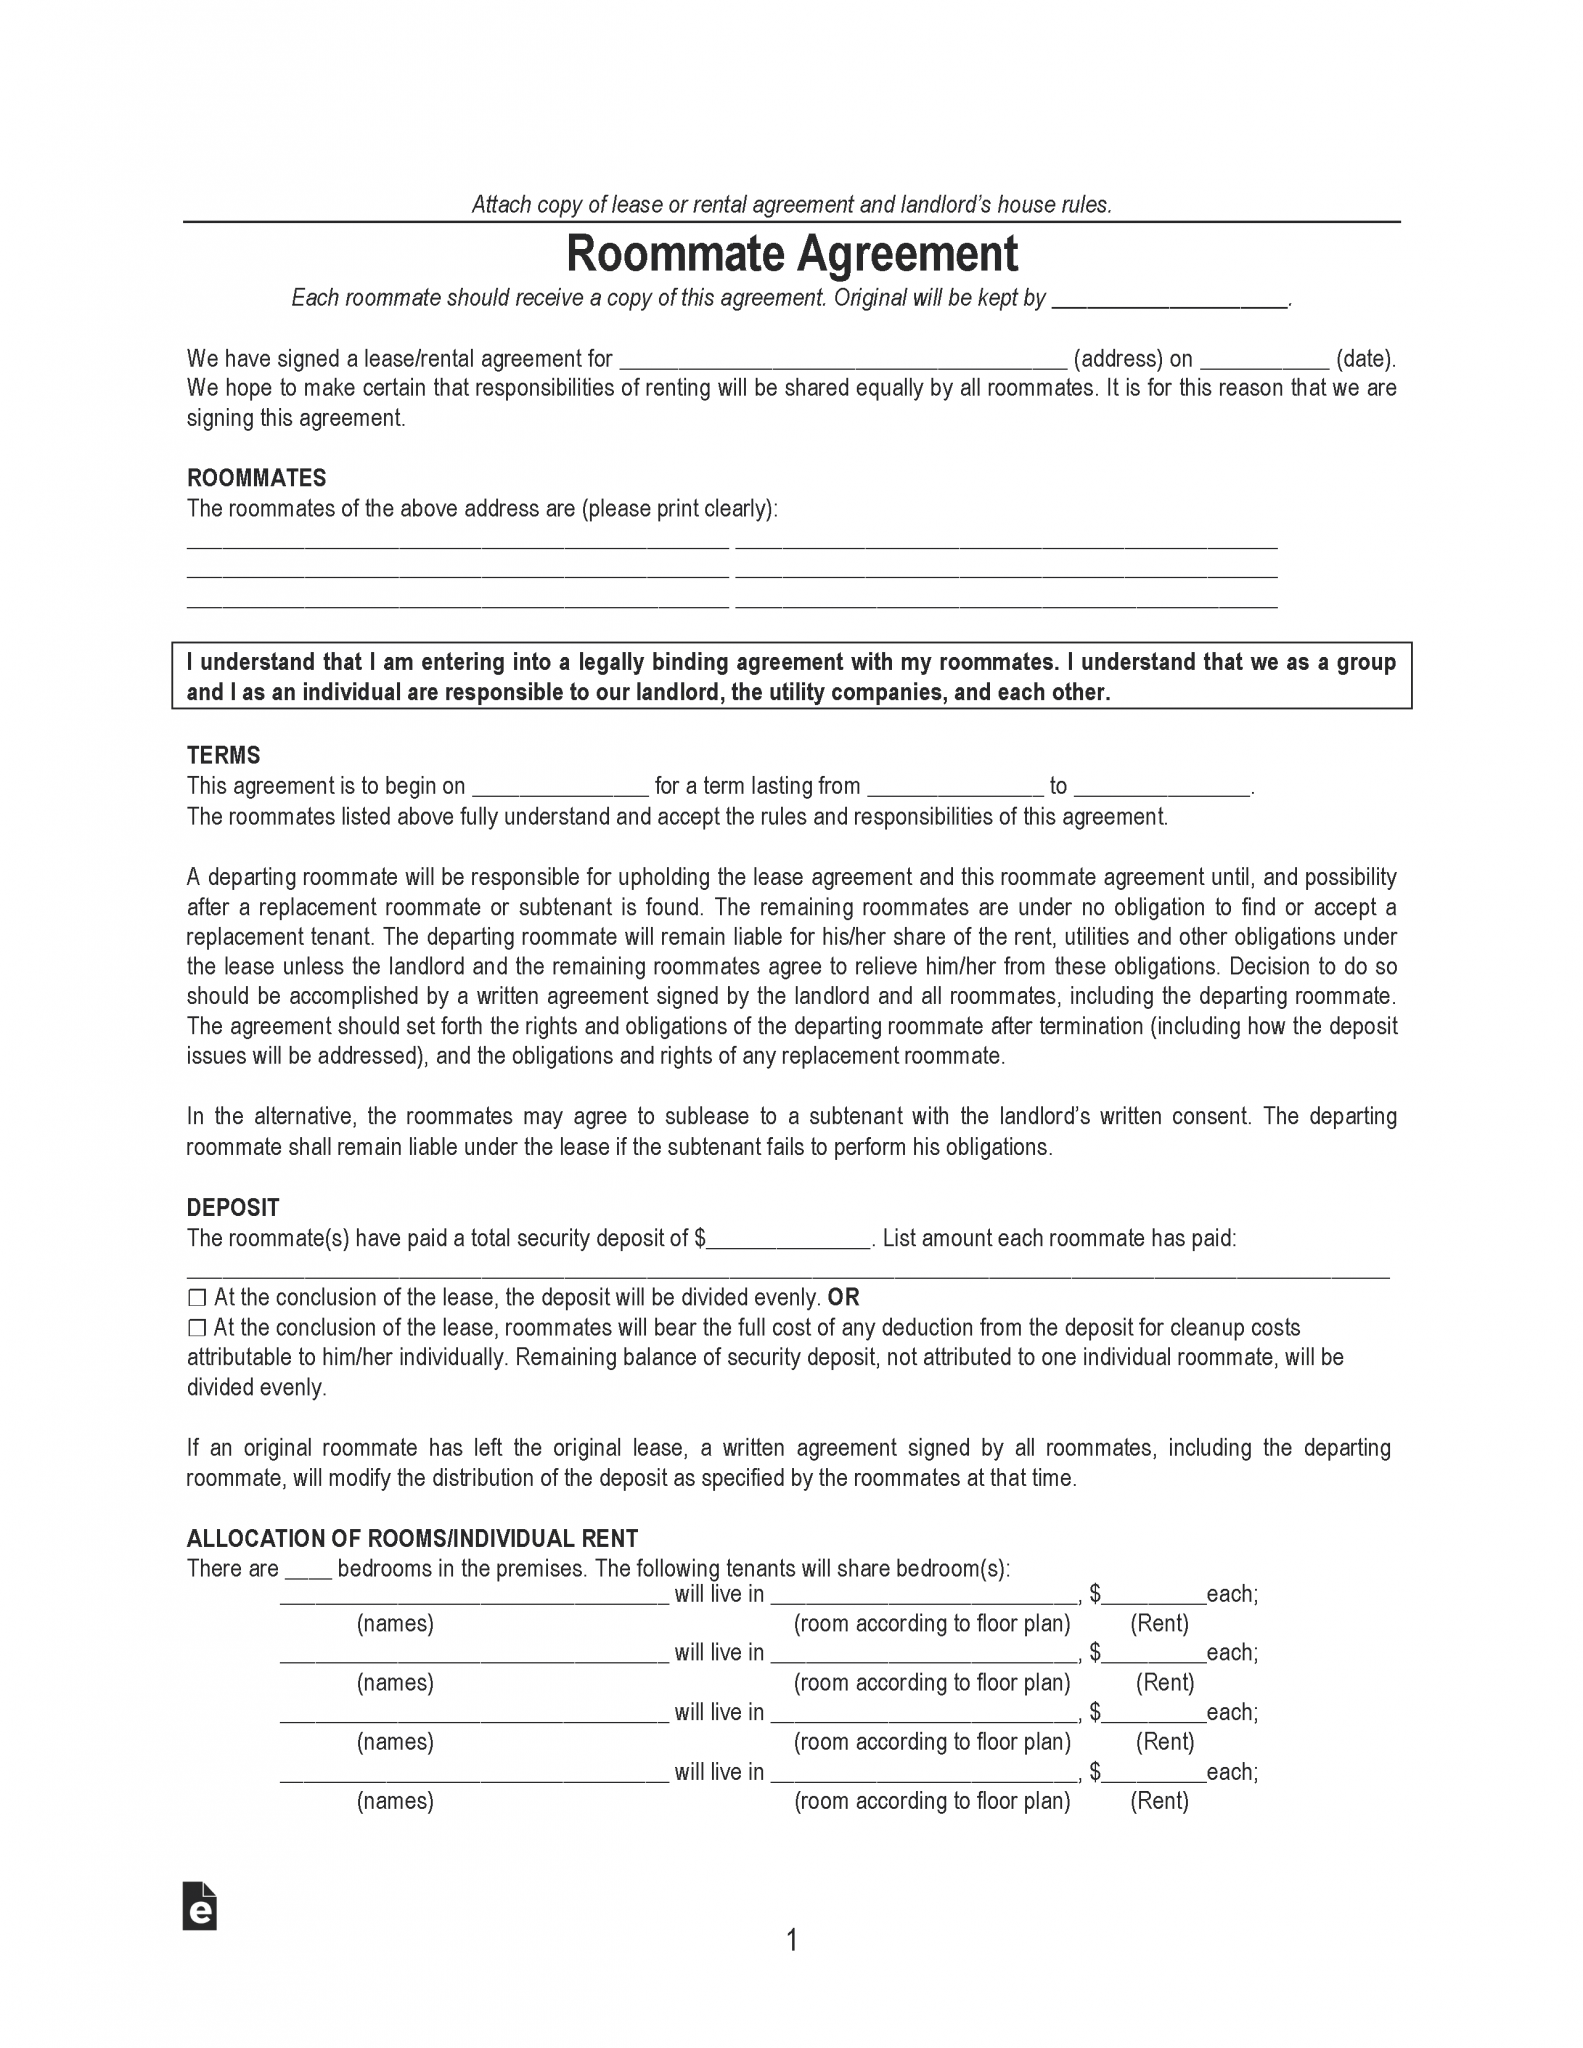 virginia-lease-agreement-templates-6